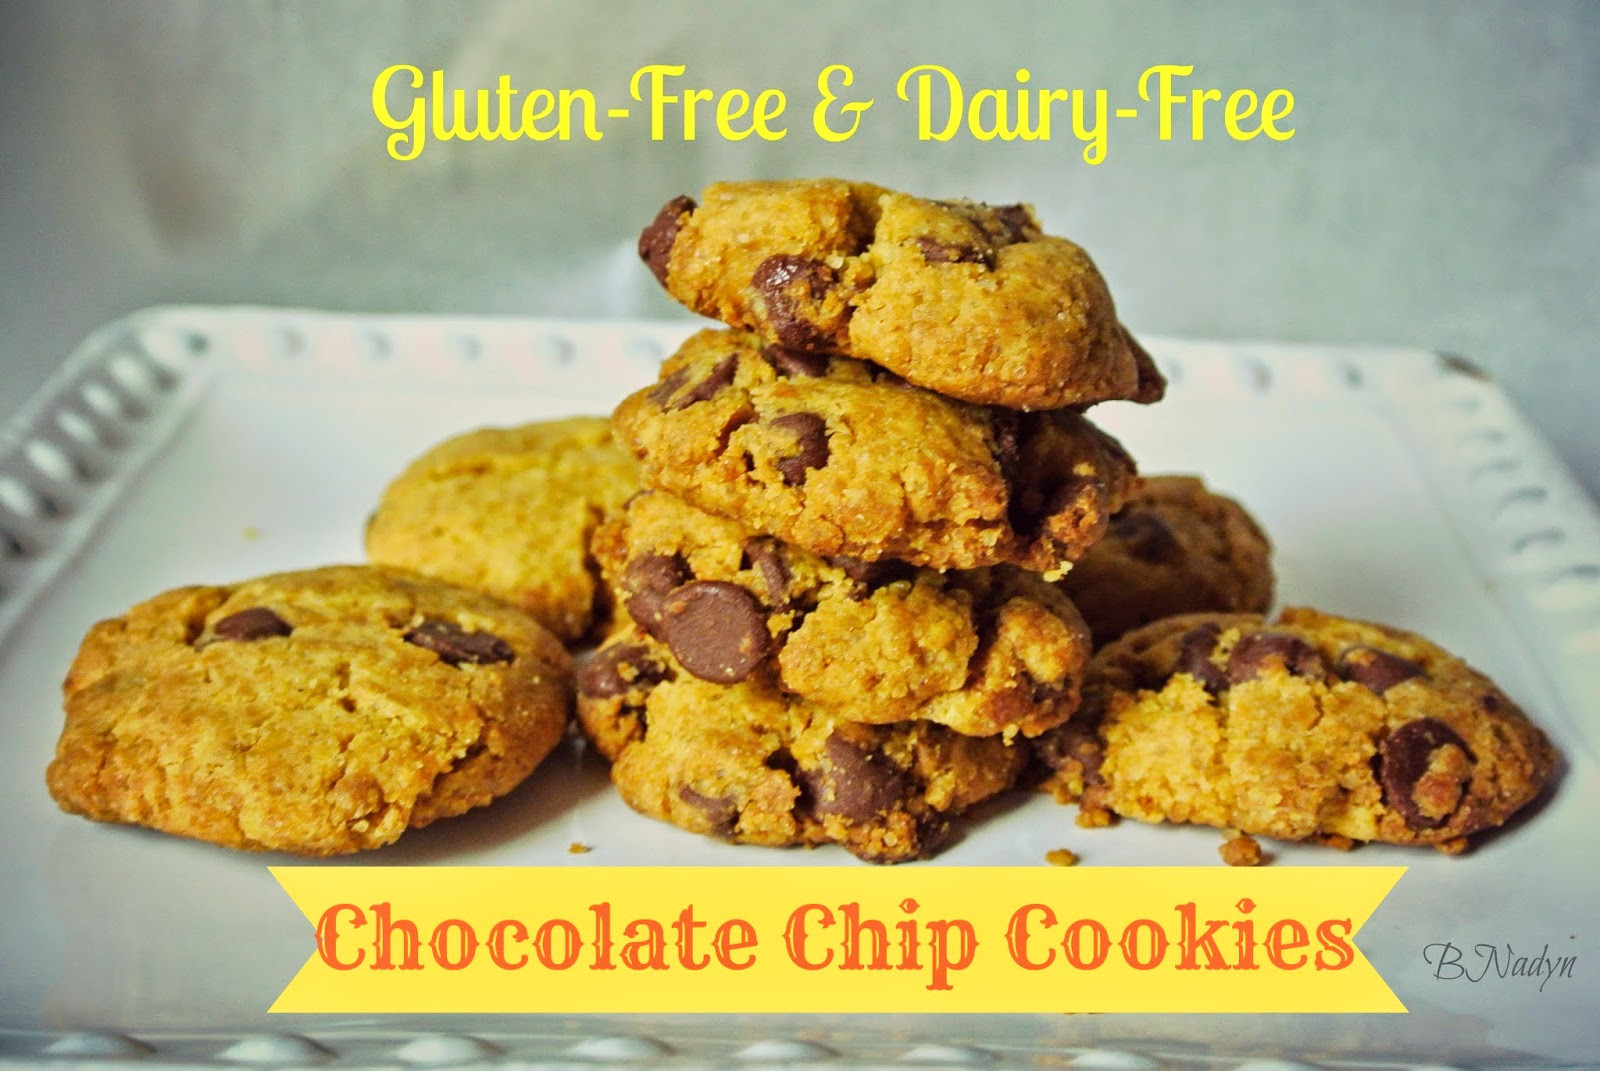 Gluten Free Dairy Free Chocolate Chip Cookies
 B is 4 Brody s Gluten Free Dairy Free Chocolate Chip Cookies